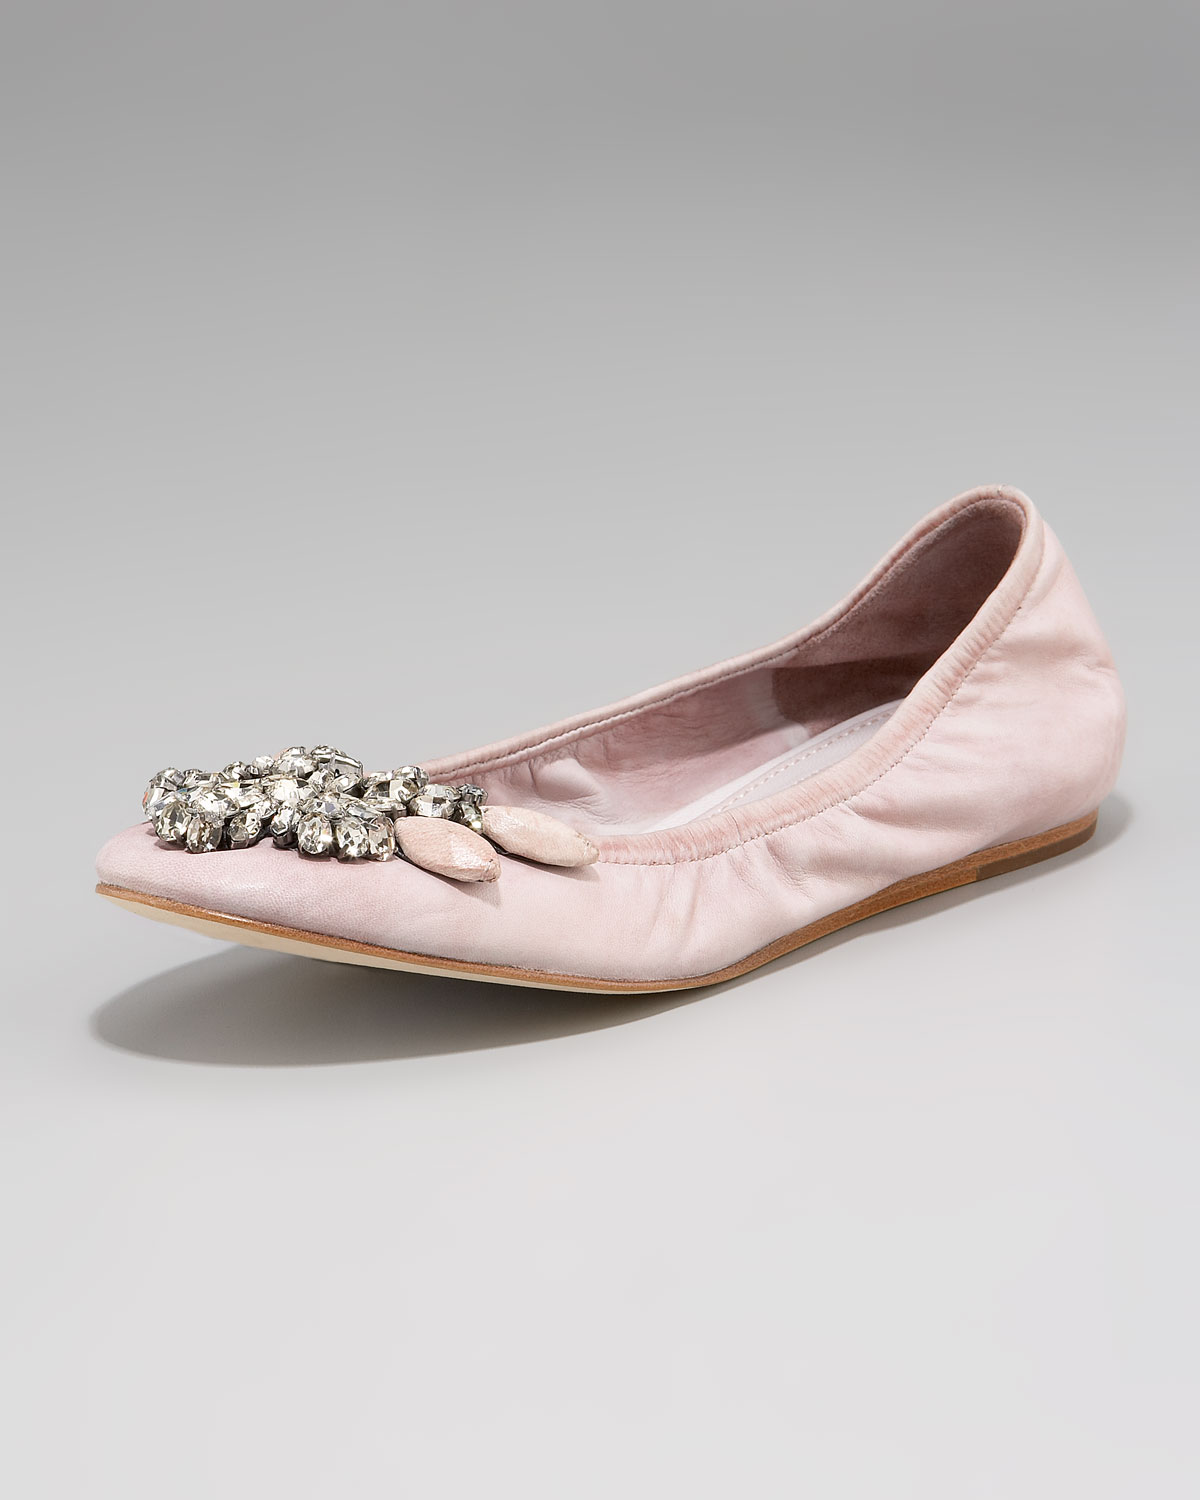 Lyst - Vera wang lavender Lexi Jeweled Ballerina Flat in Pink